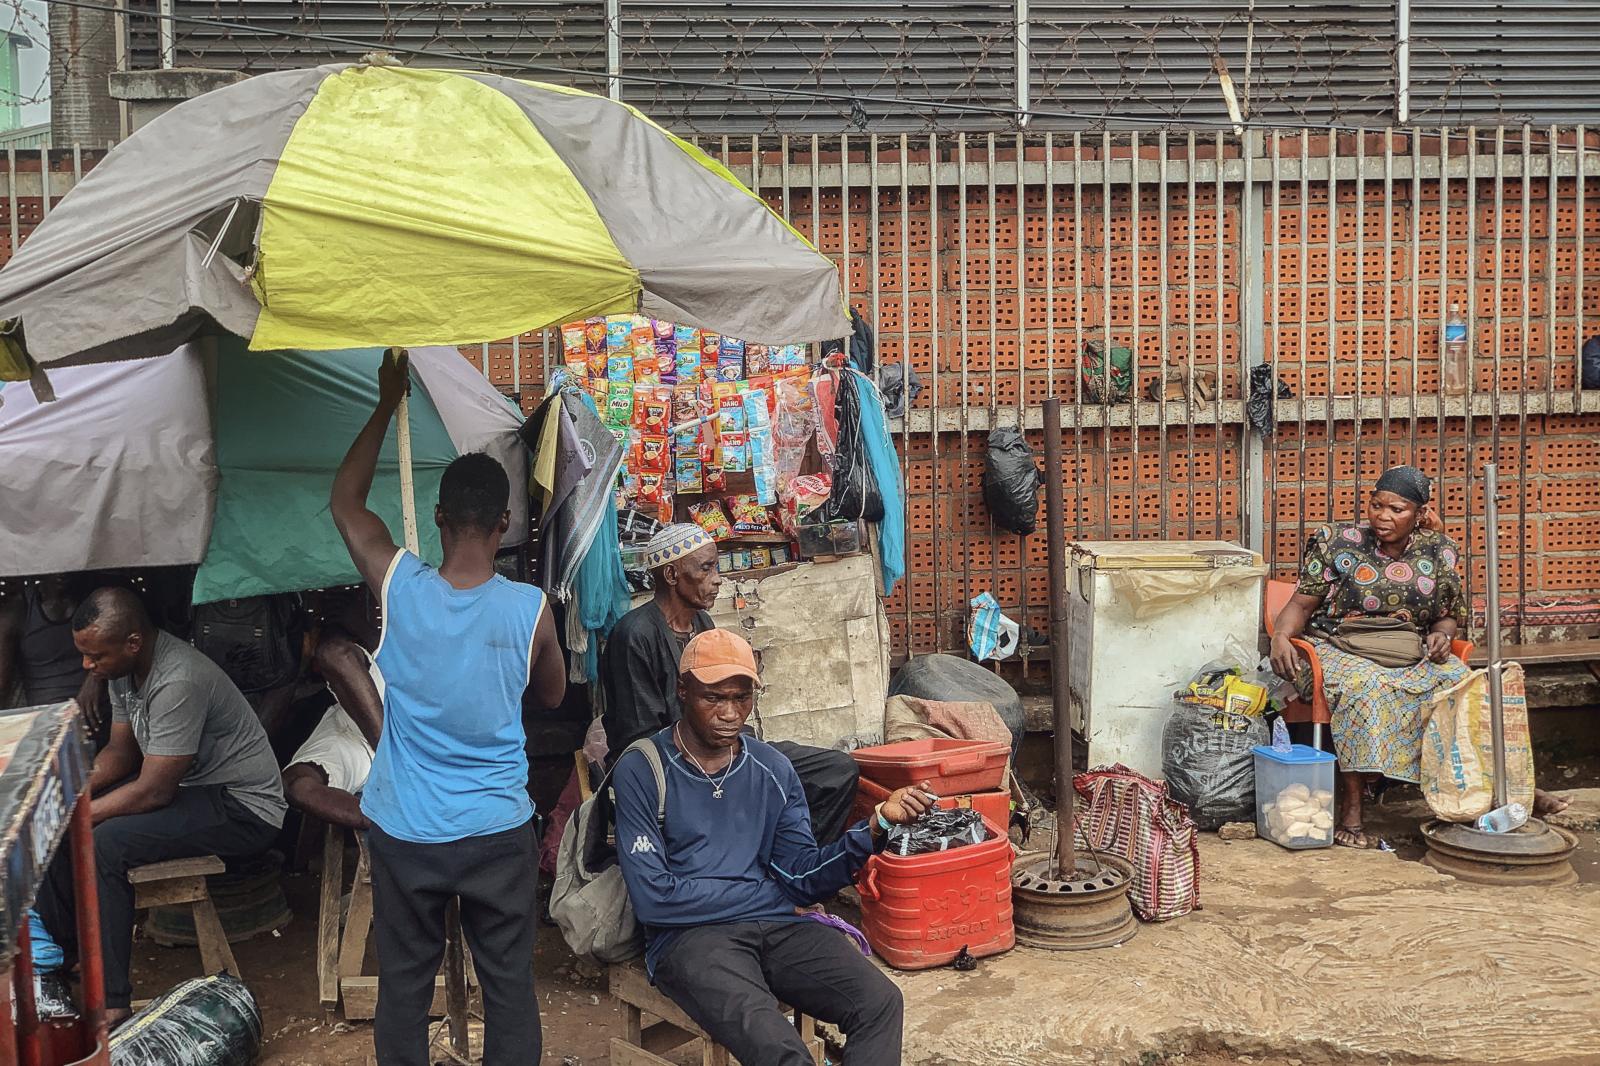 LagosLivesOn: A journalist's journey through street photography 